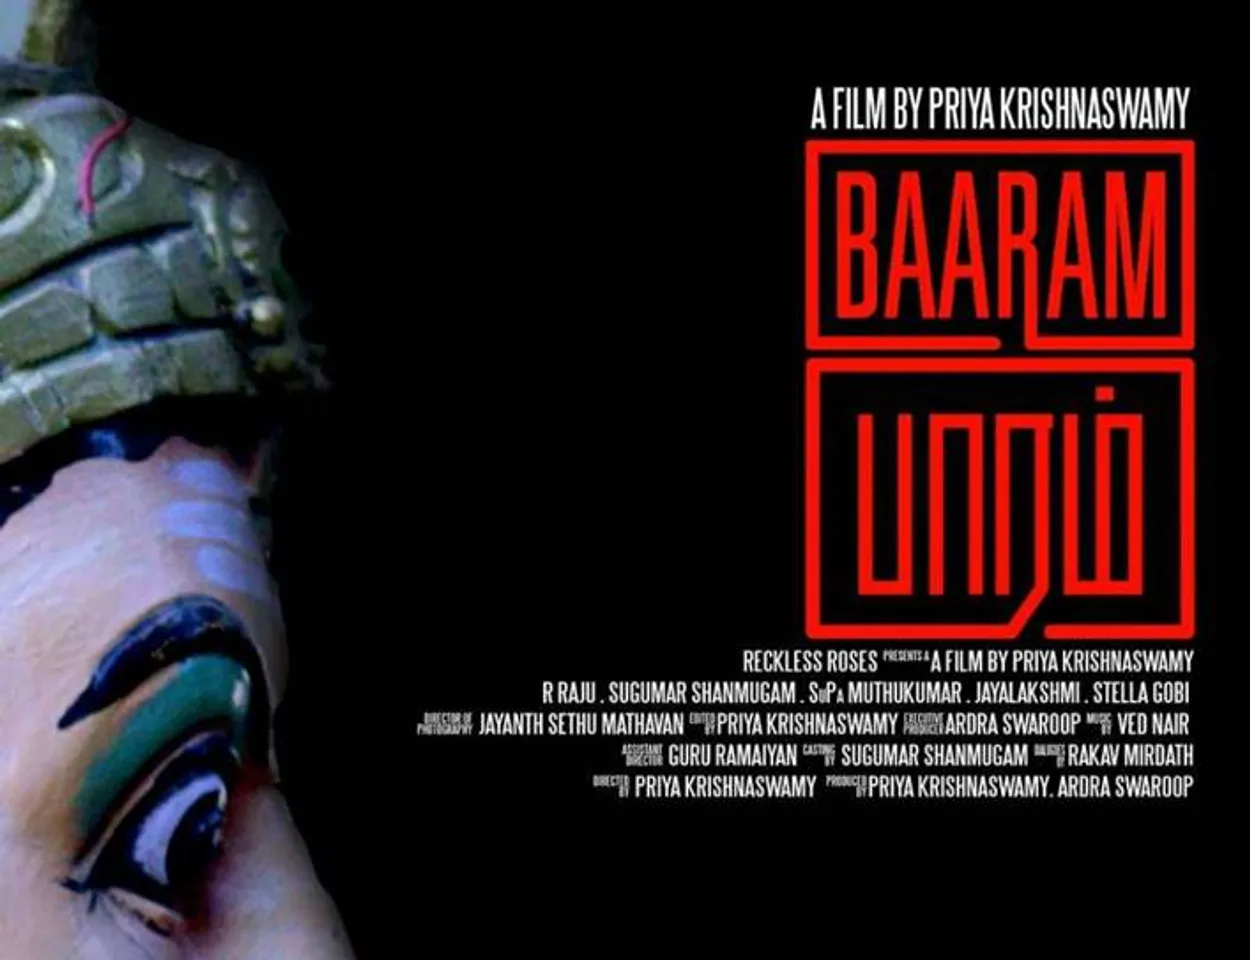 Priya Krishnaswamy talks about Baaram movie